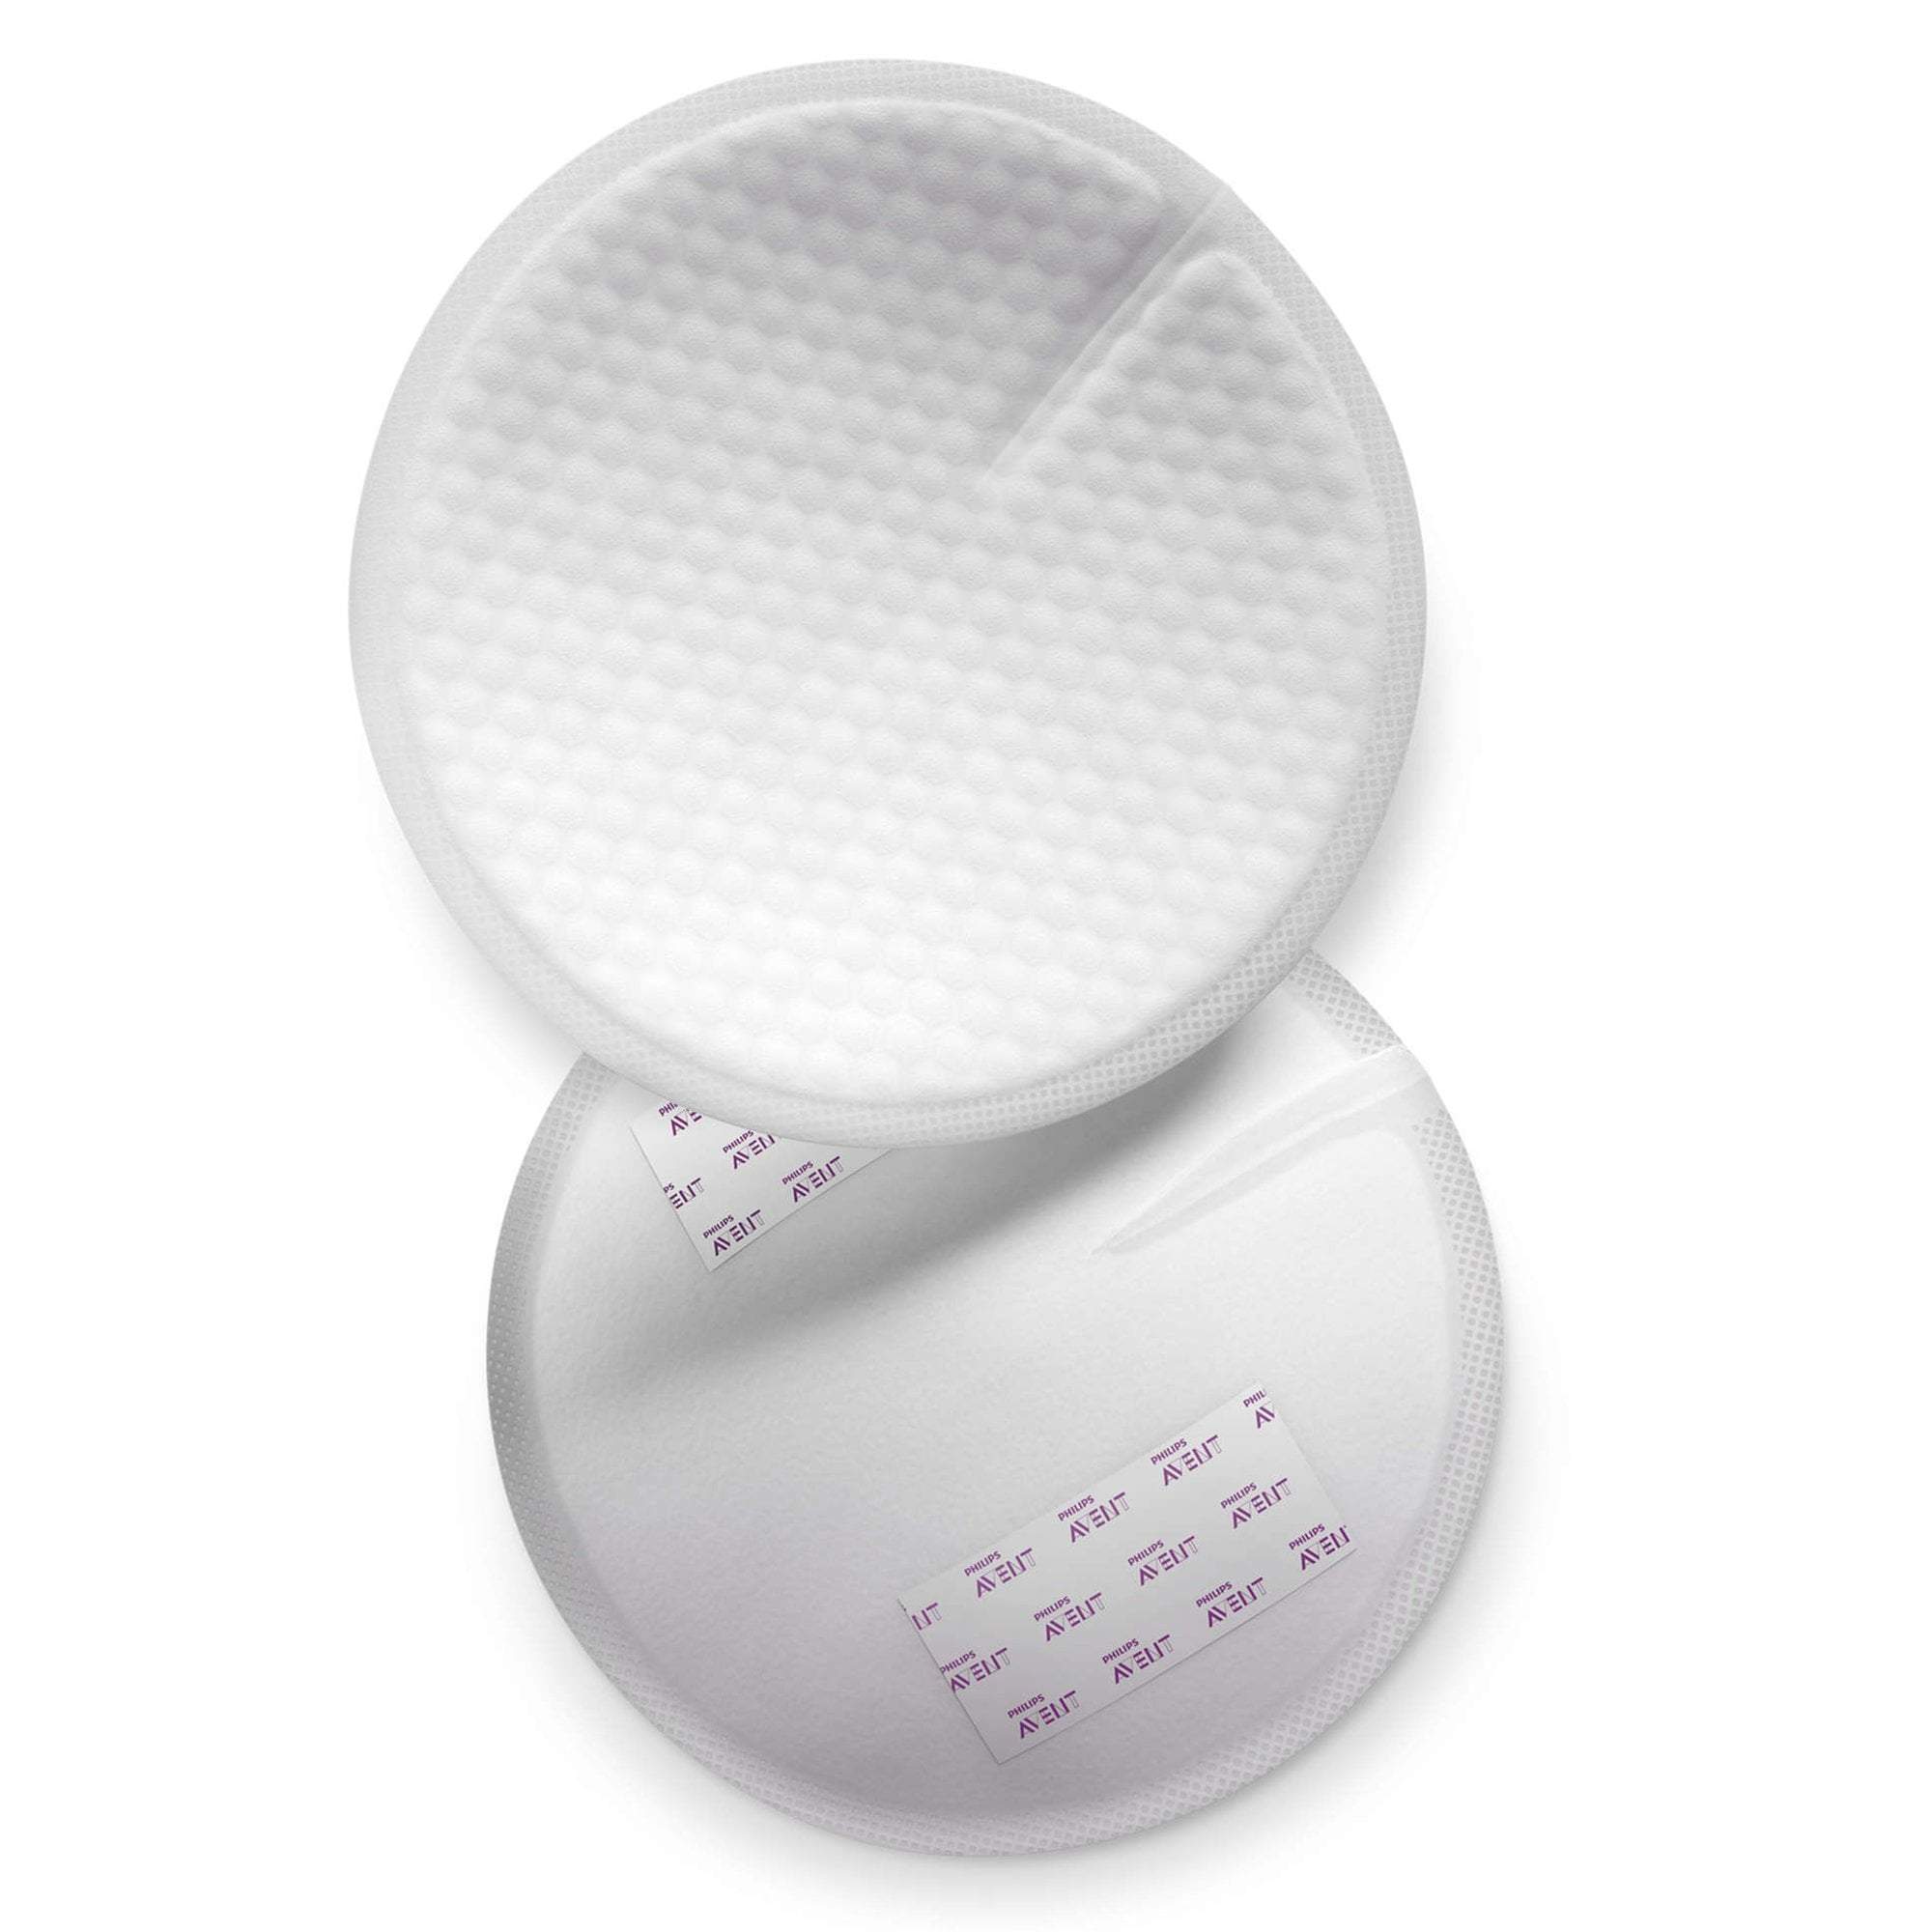 Medela Safe & Dry™ Ultra thin disposable nursing pads 